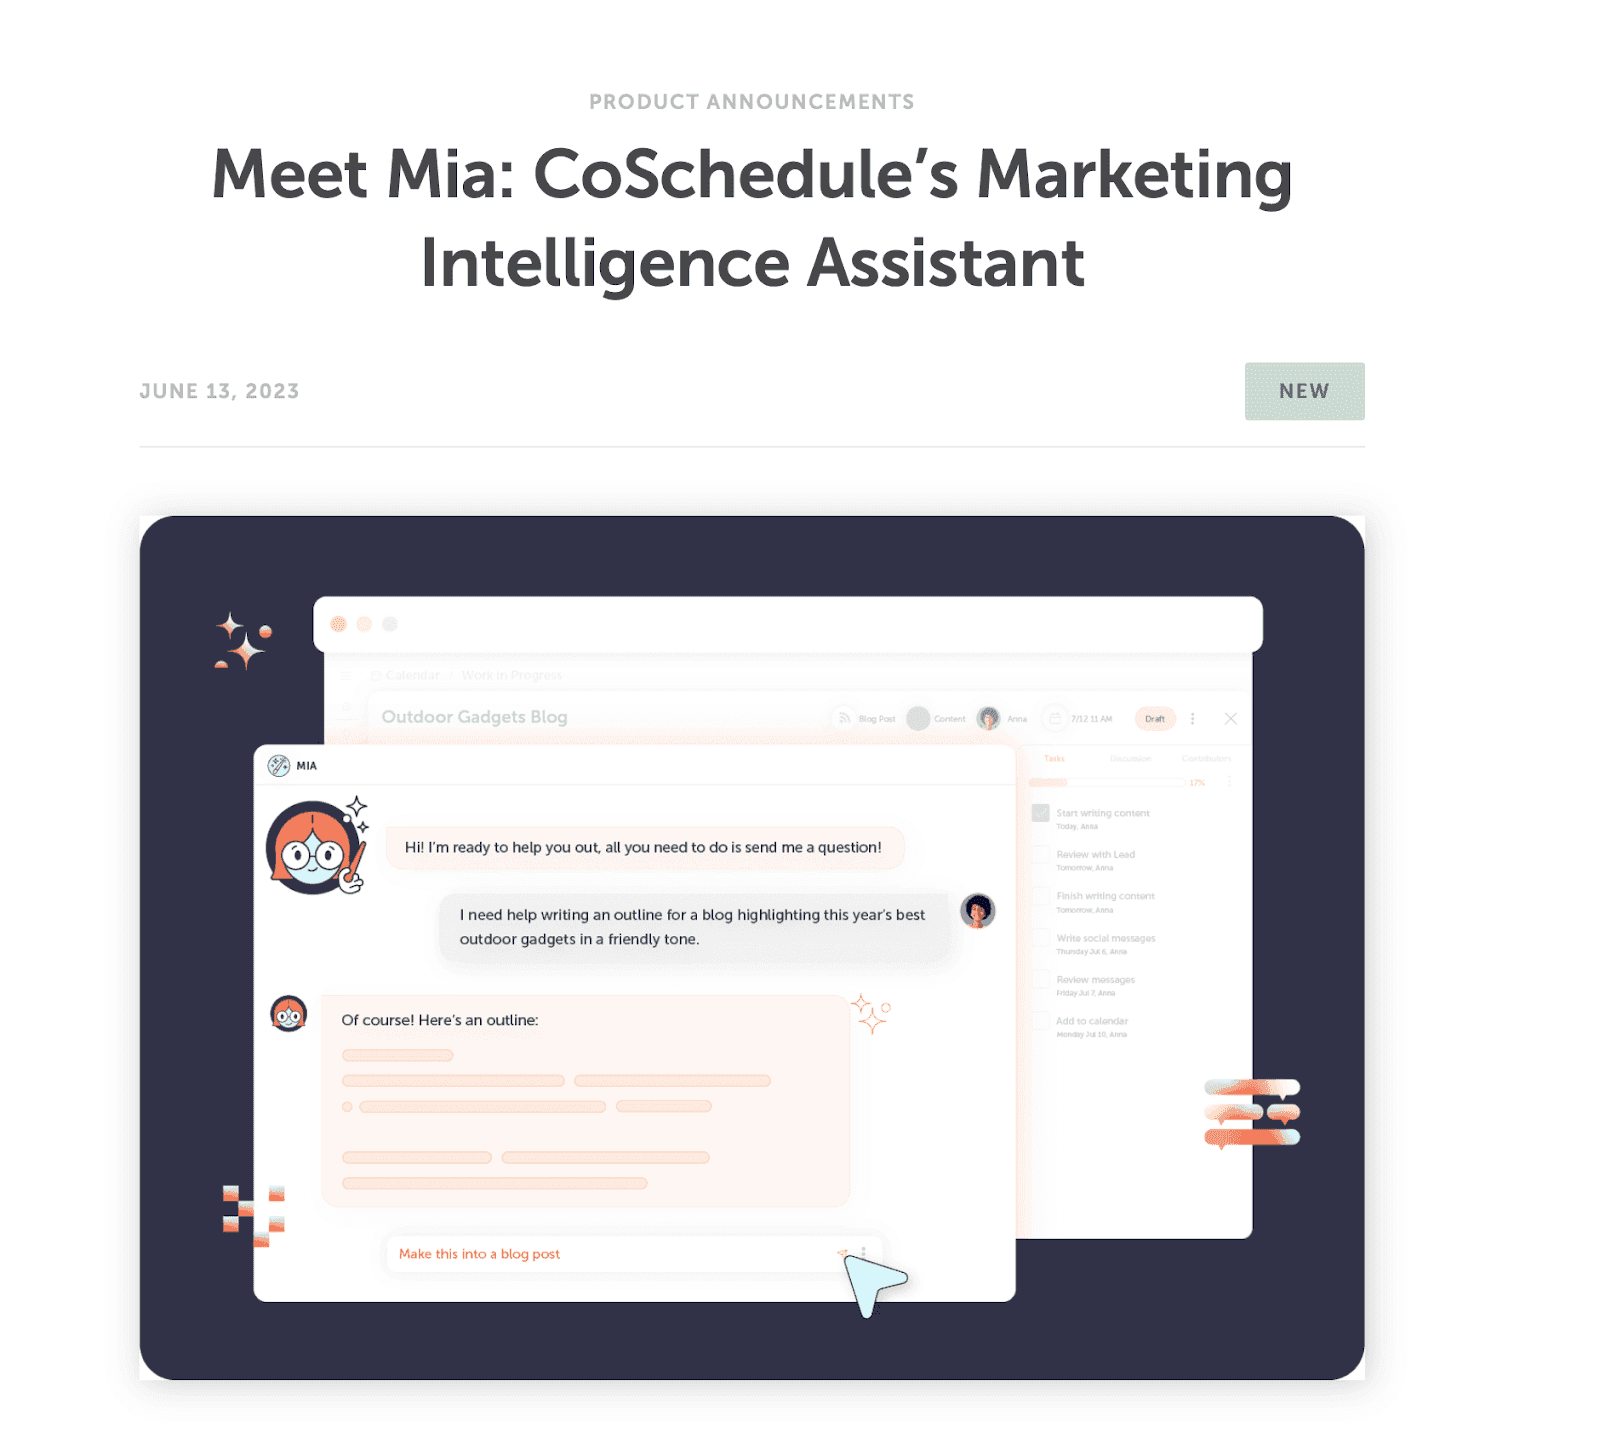 Meet Mia: CoSchedule's Marketing Intelligence Assistant